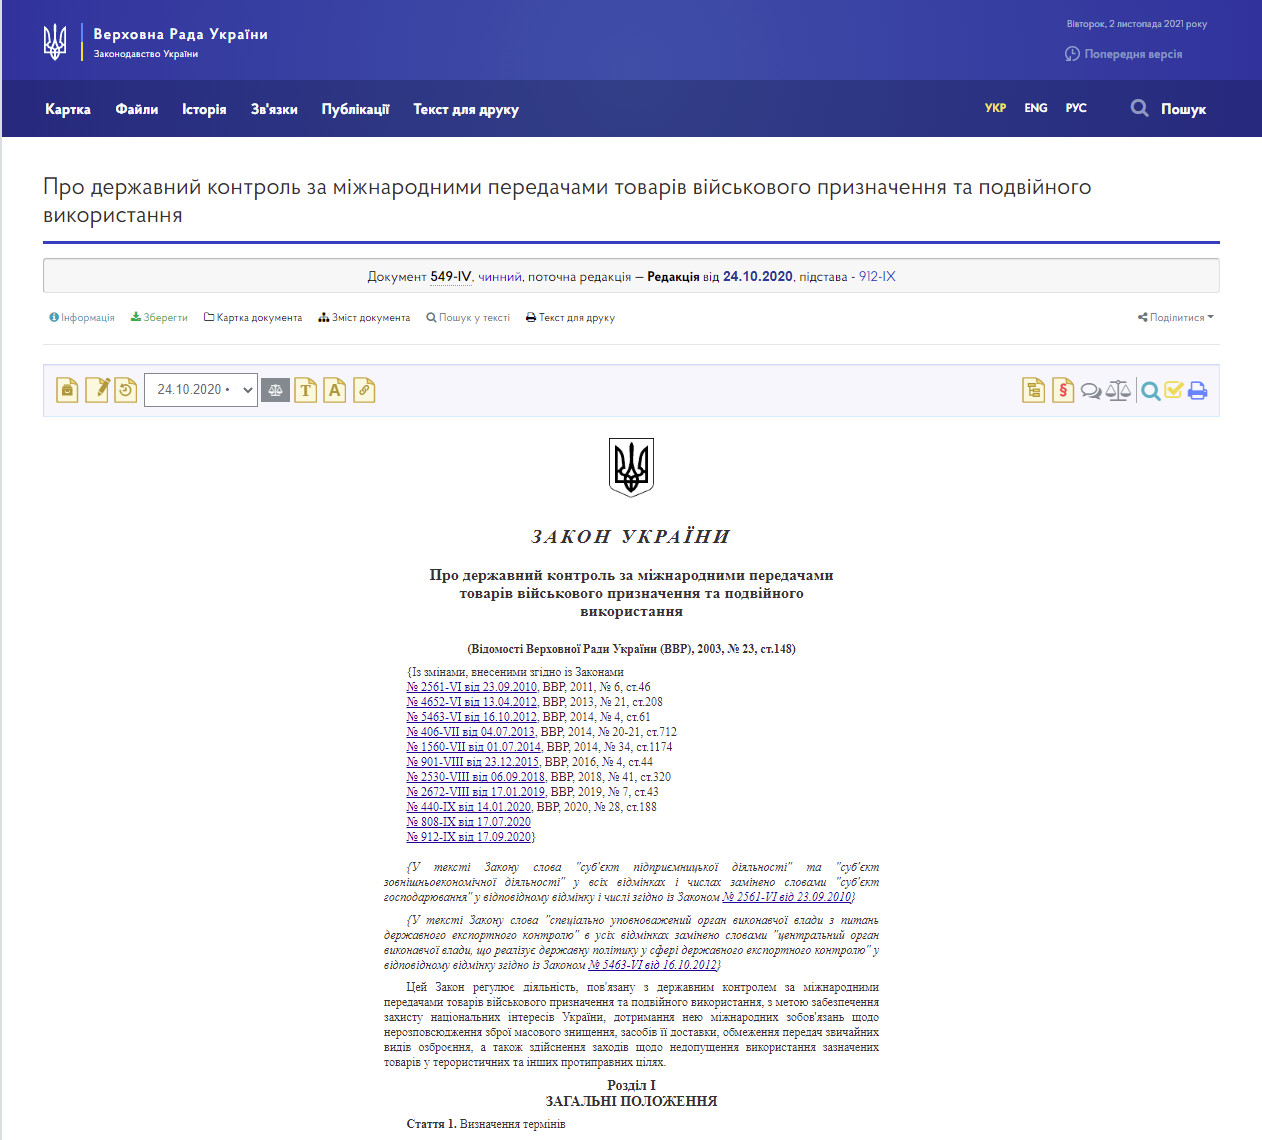 https://zakon.rada.gov.ua/laws/show/549-15#Text